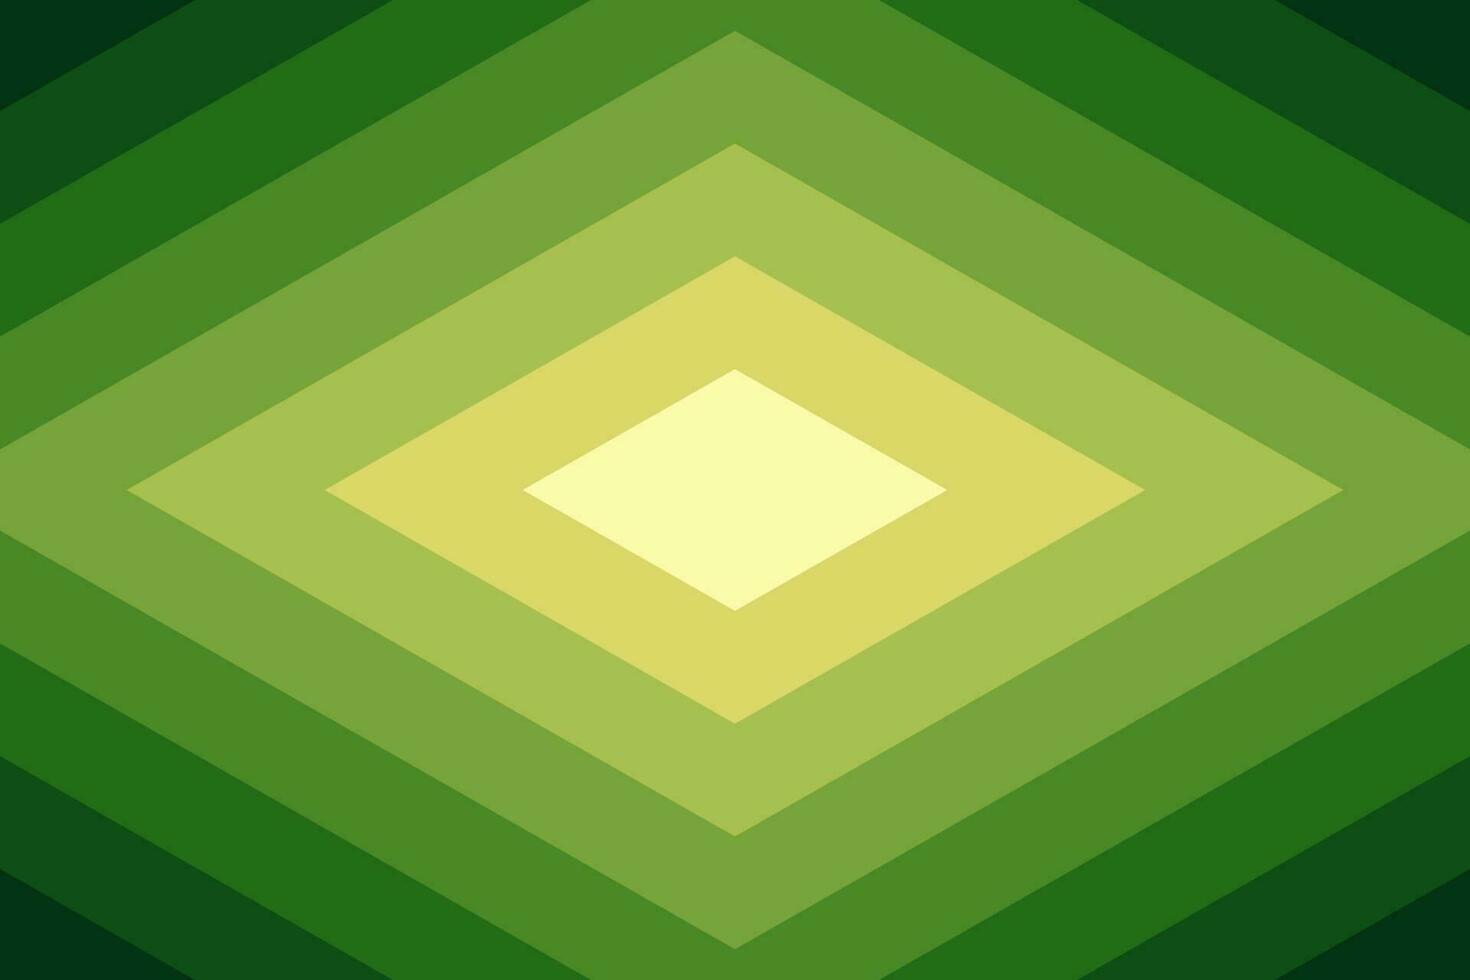 Geometric paper cut green color design illustration vector